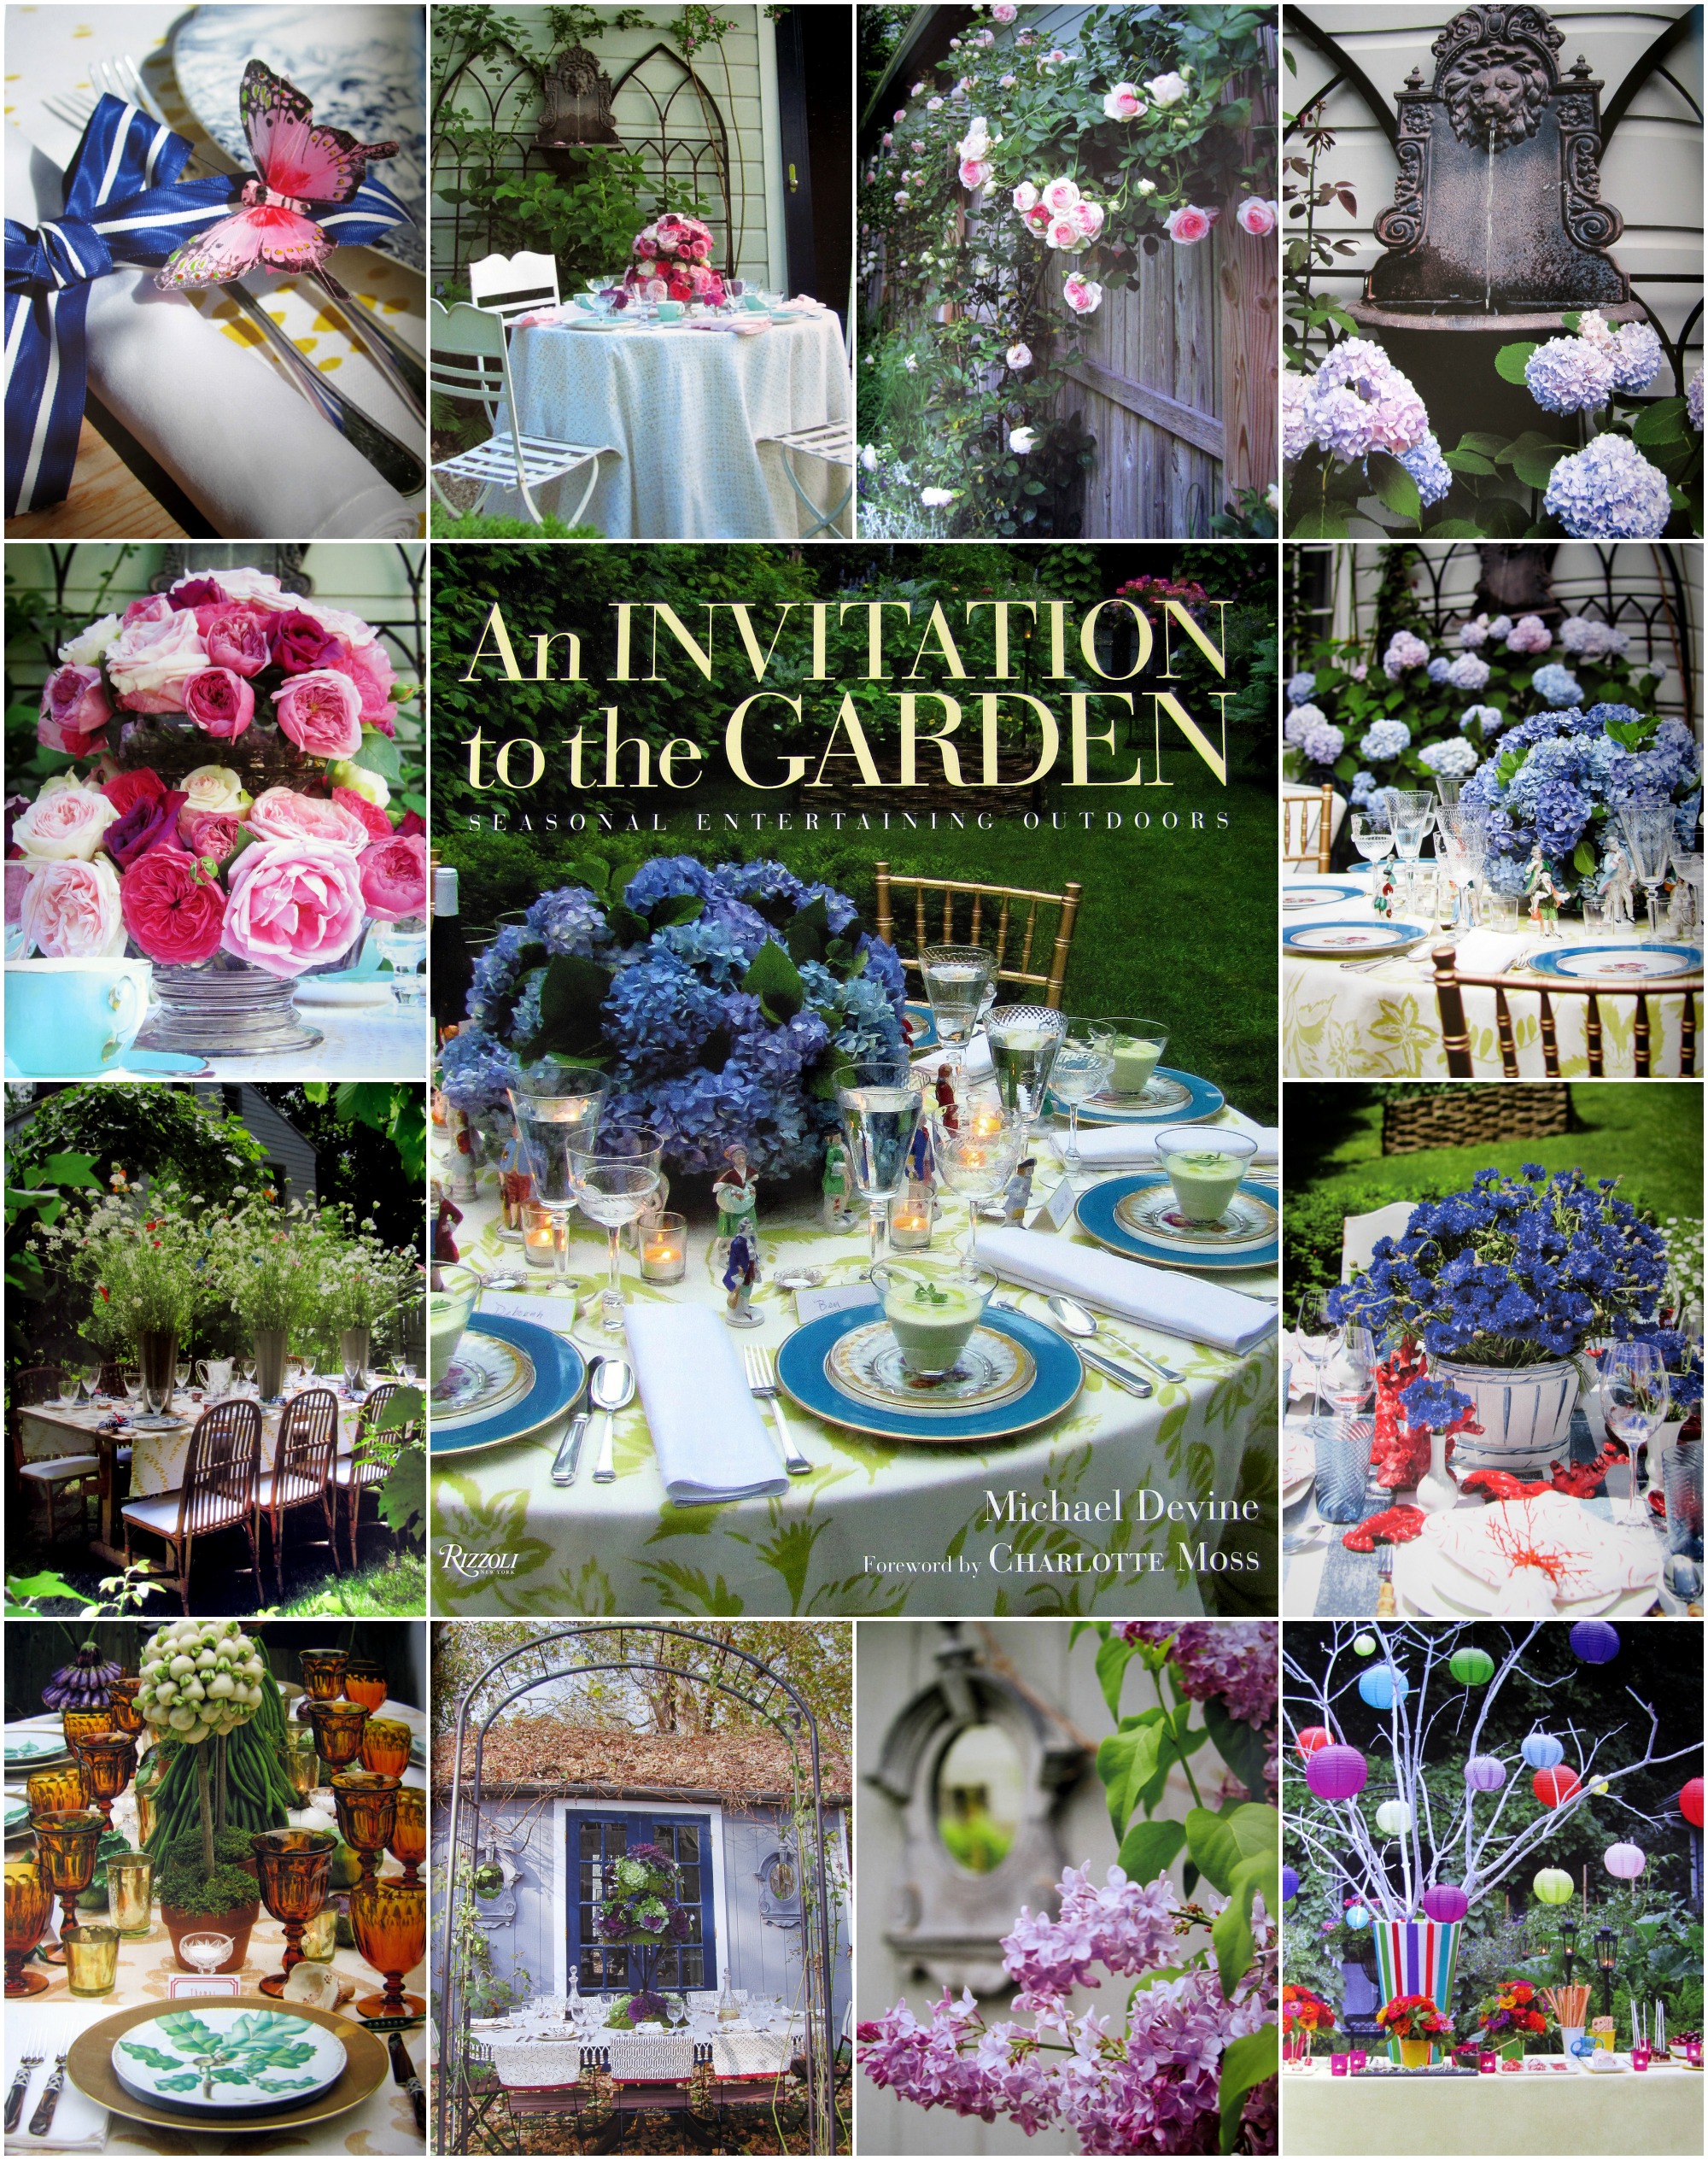  - an-invitation-to-garden-seasonal-entertaining-outdoors-by-michael-devine